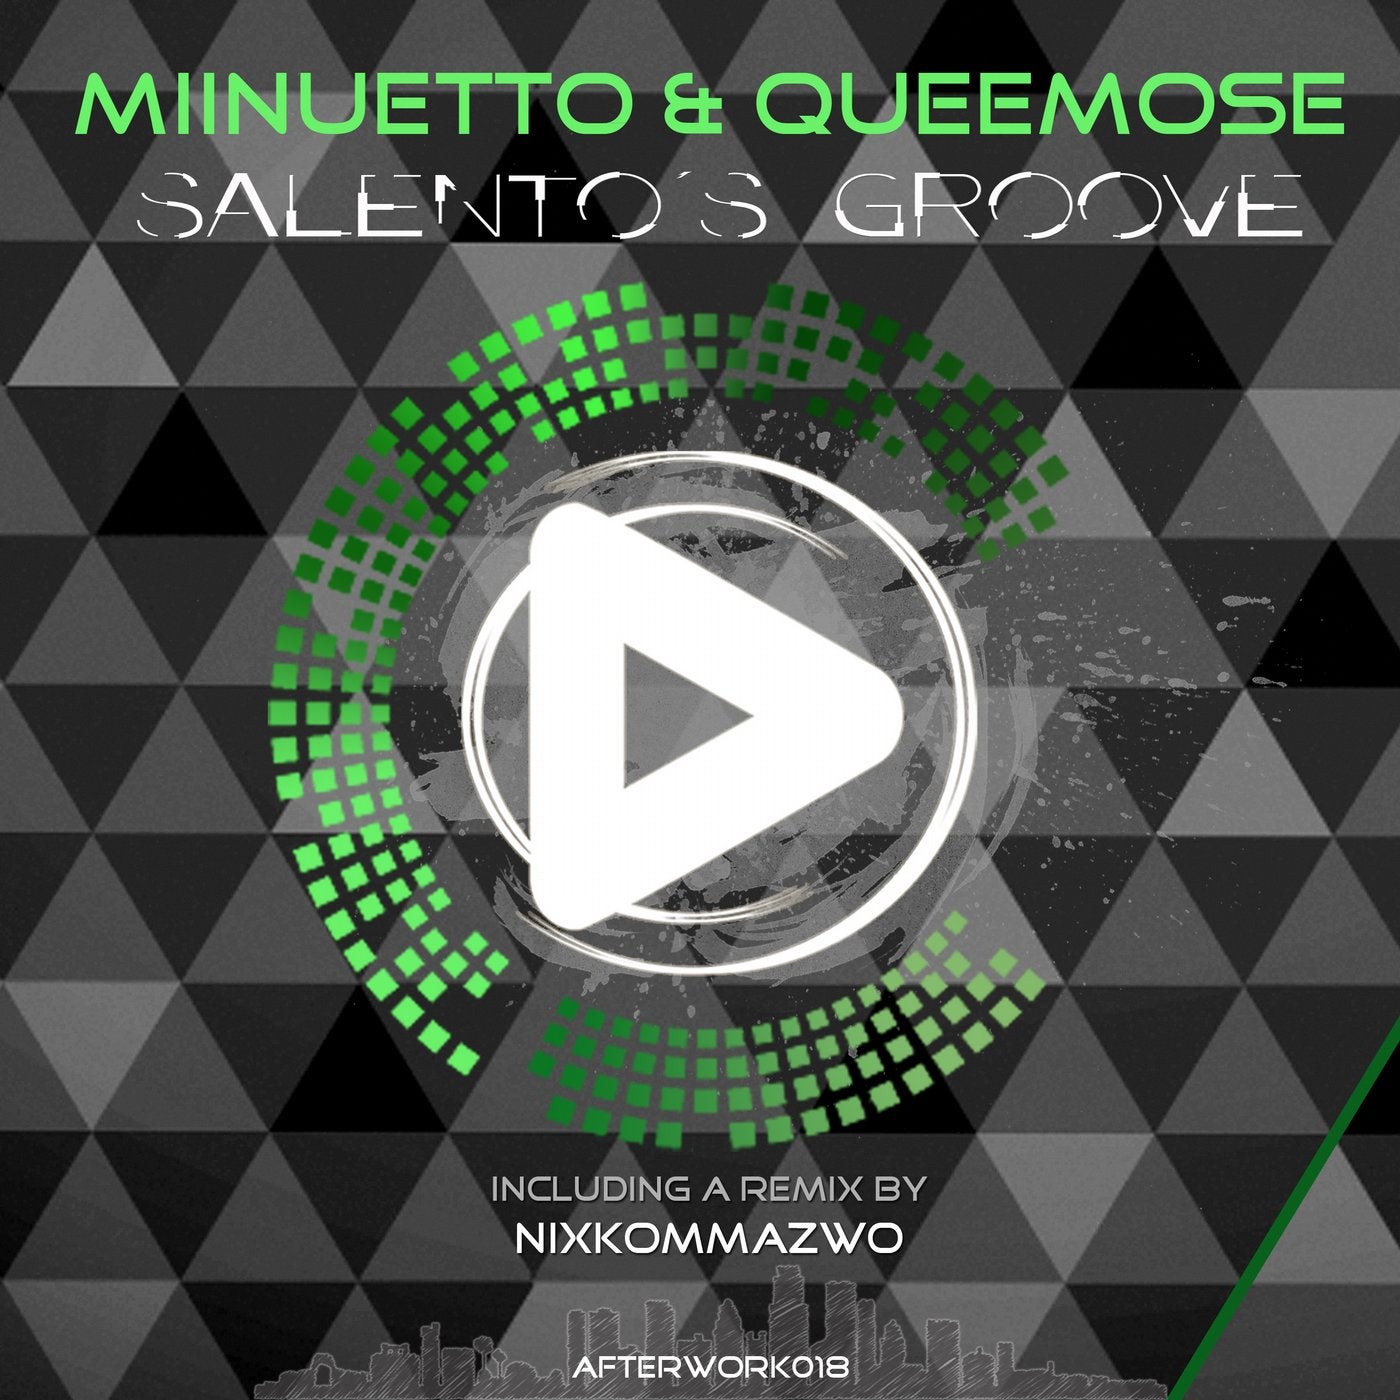 Salento's Groove